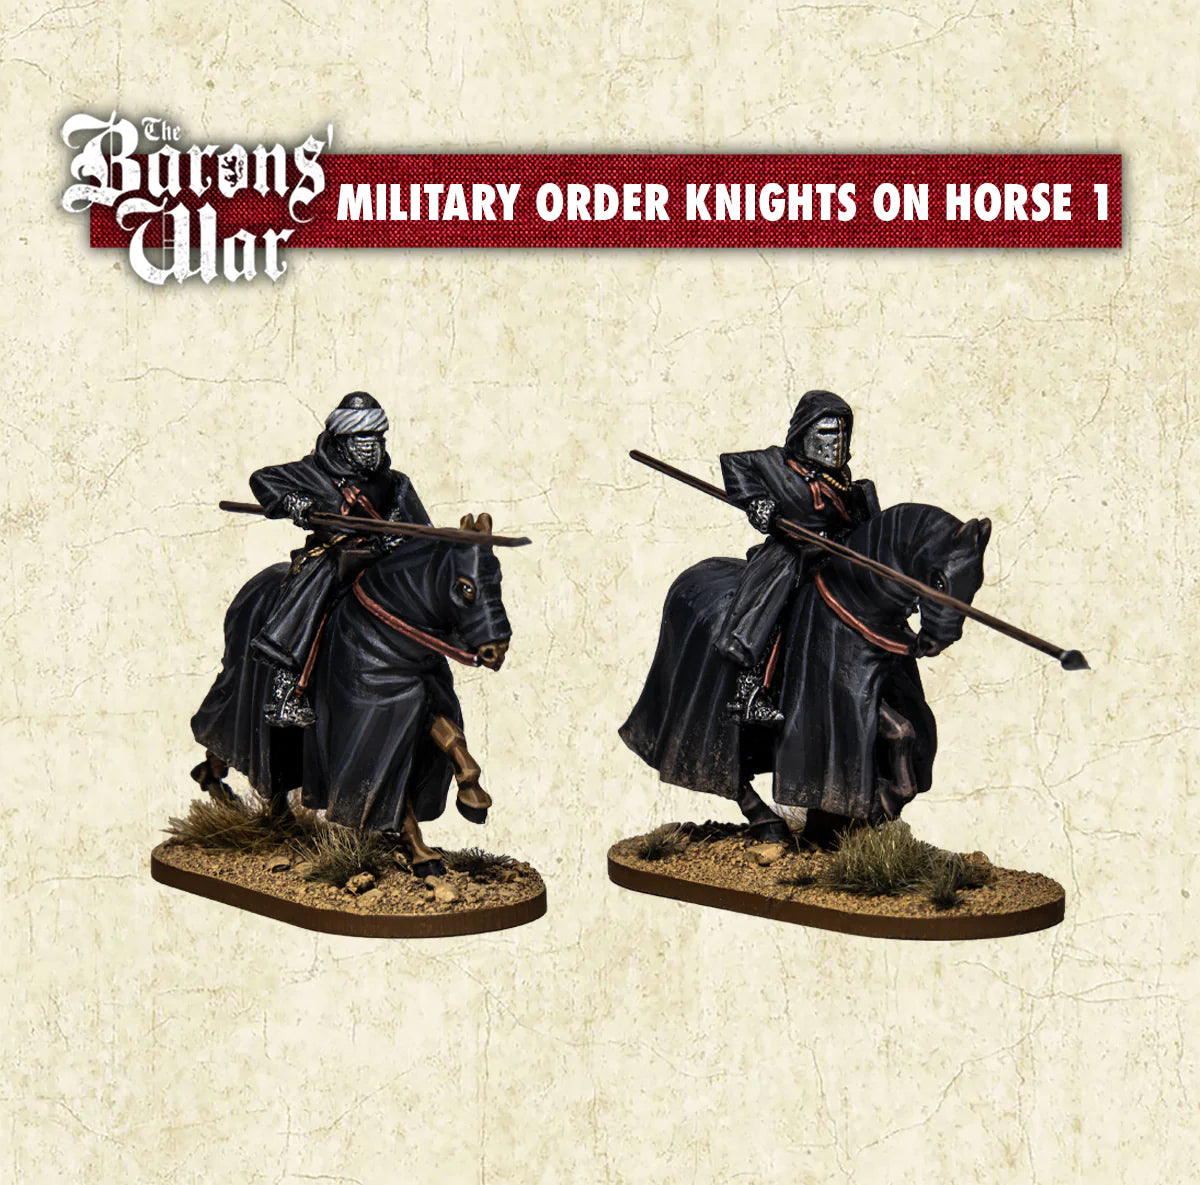 FS-OTR3 Military Order Knights on horse 1